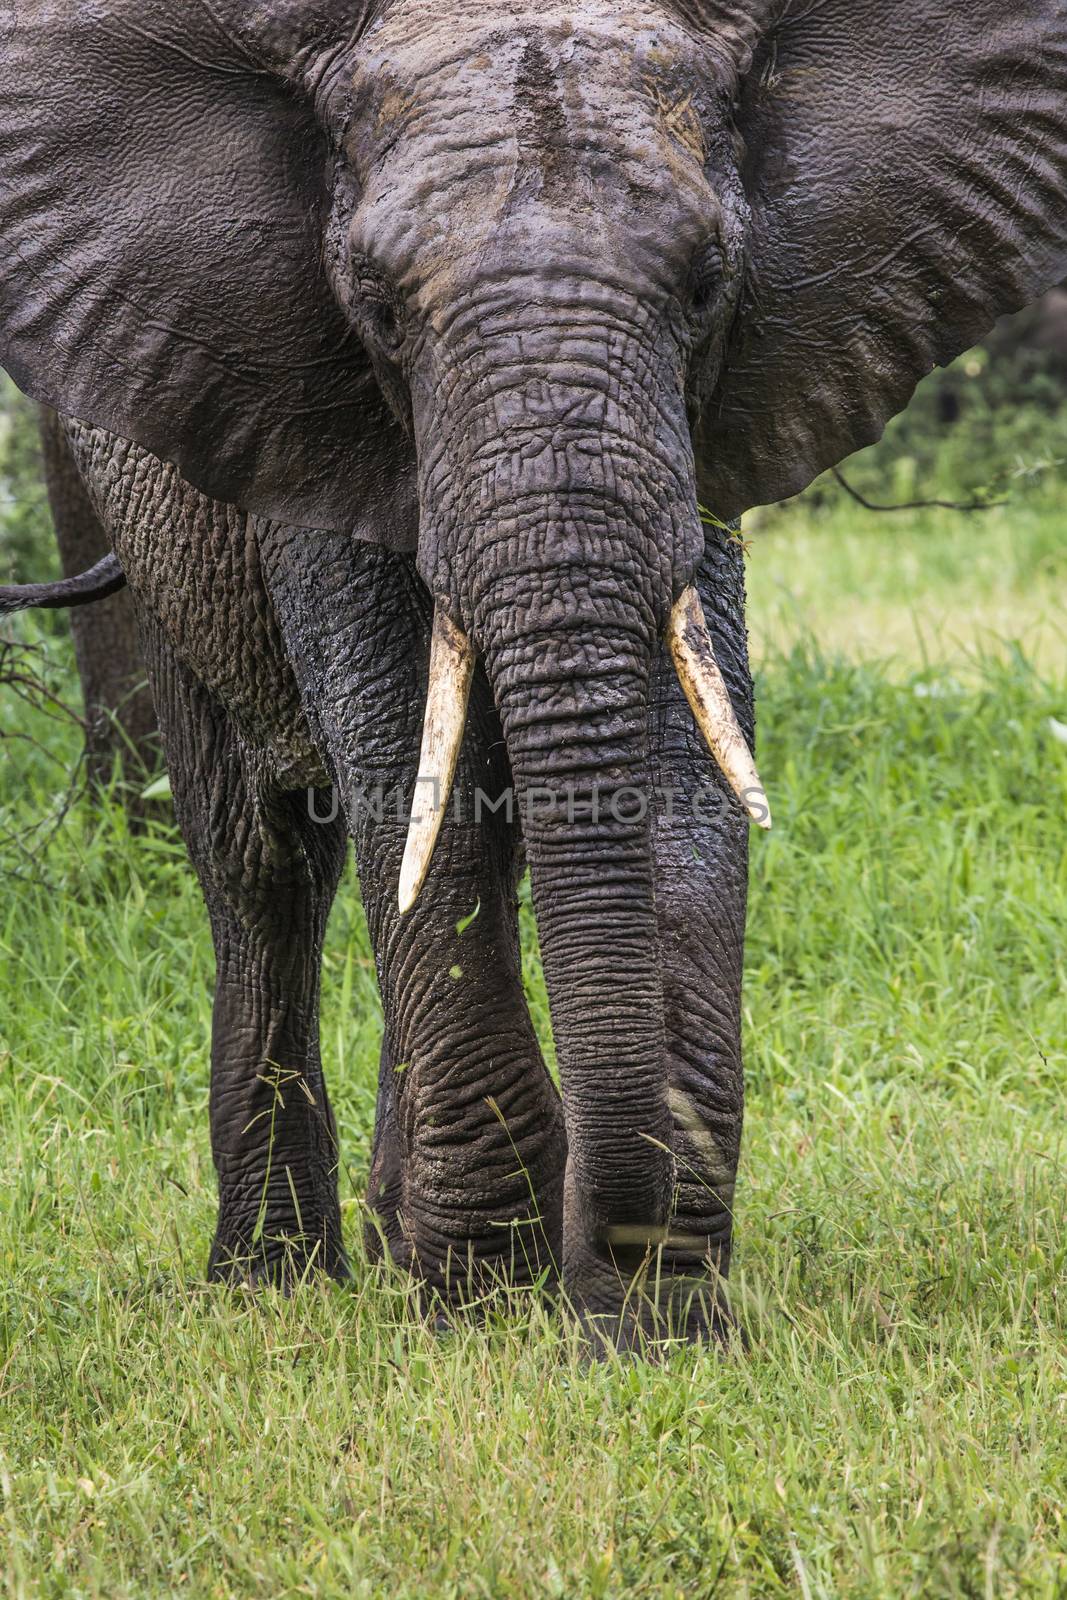 African elephant in the Tarangire National Park, Tanzania